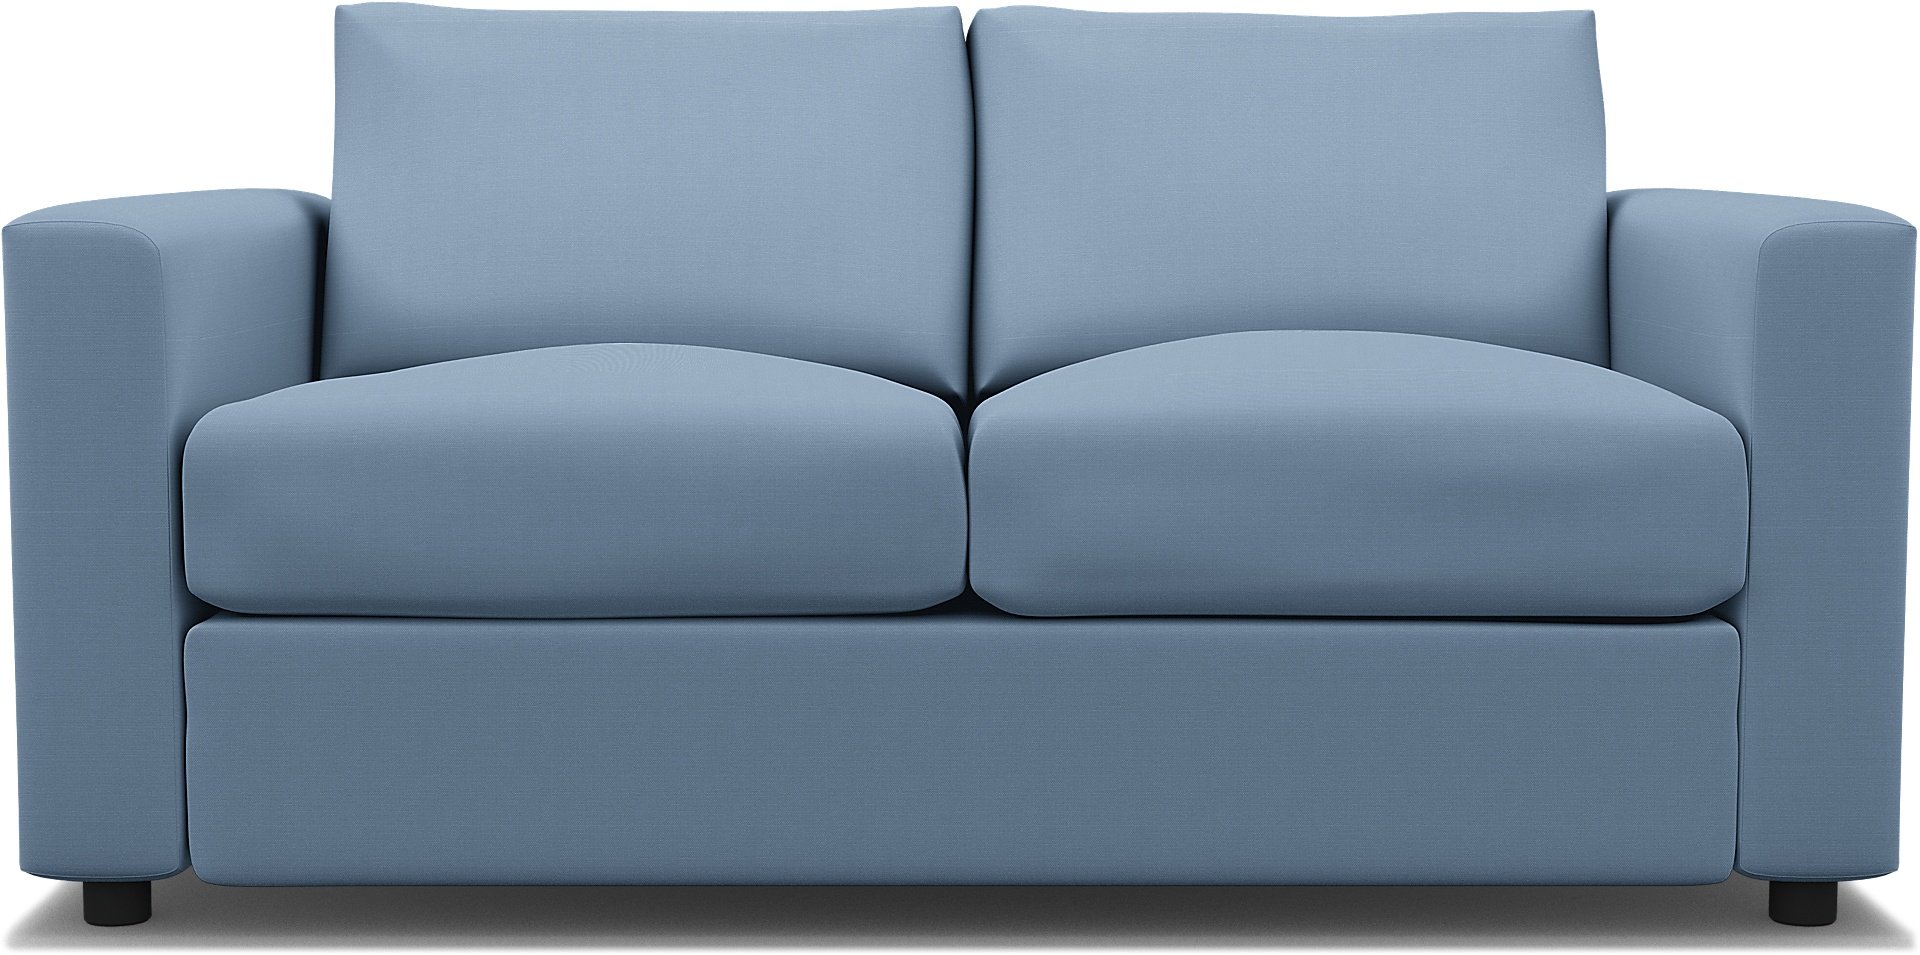 IKEA - Vimle 2 Seater Sofa Bed Cover, Dusty Blue, Cotton - Bemz